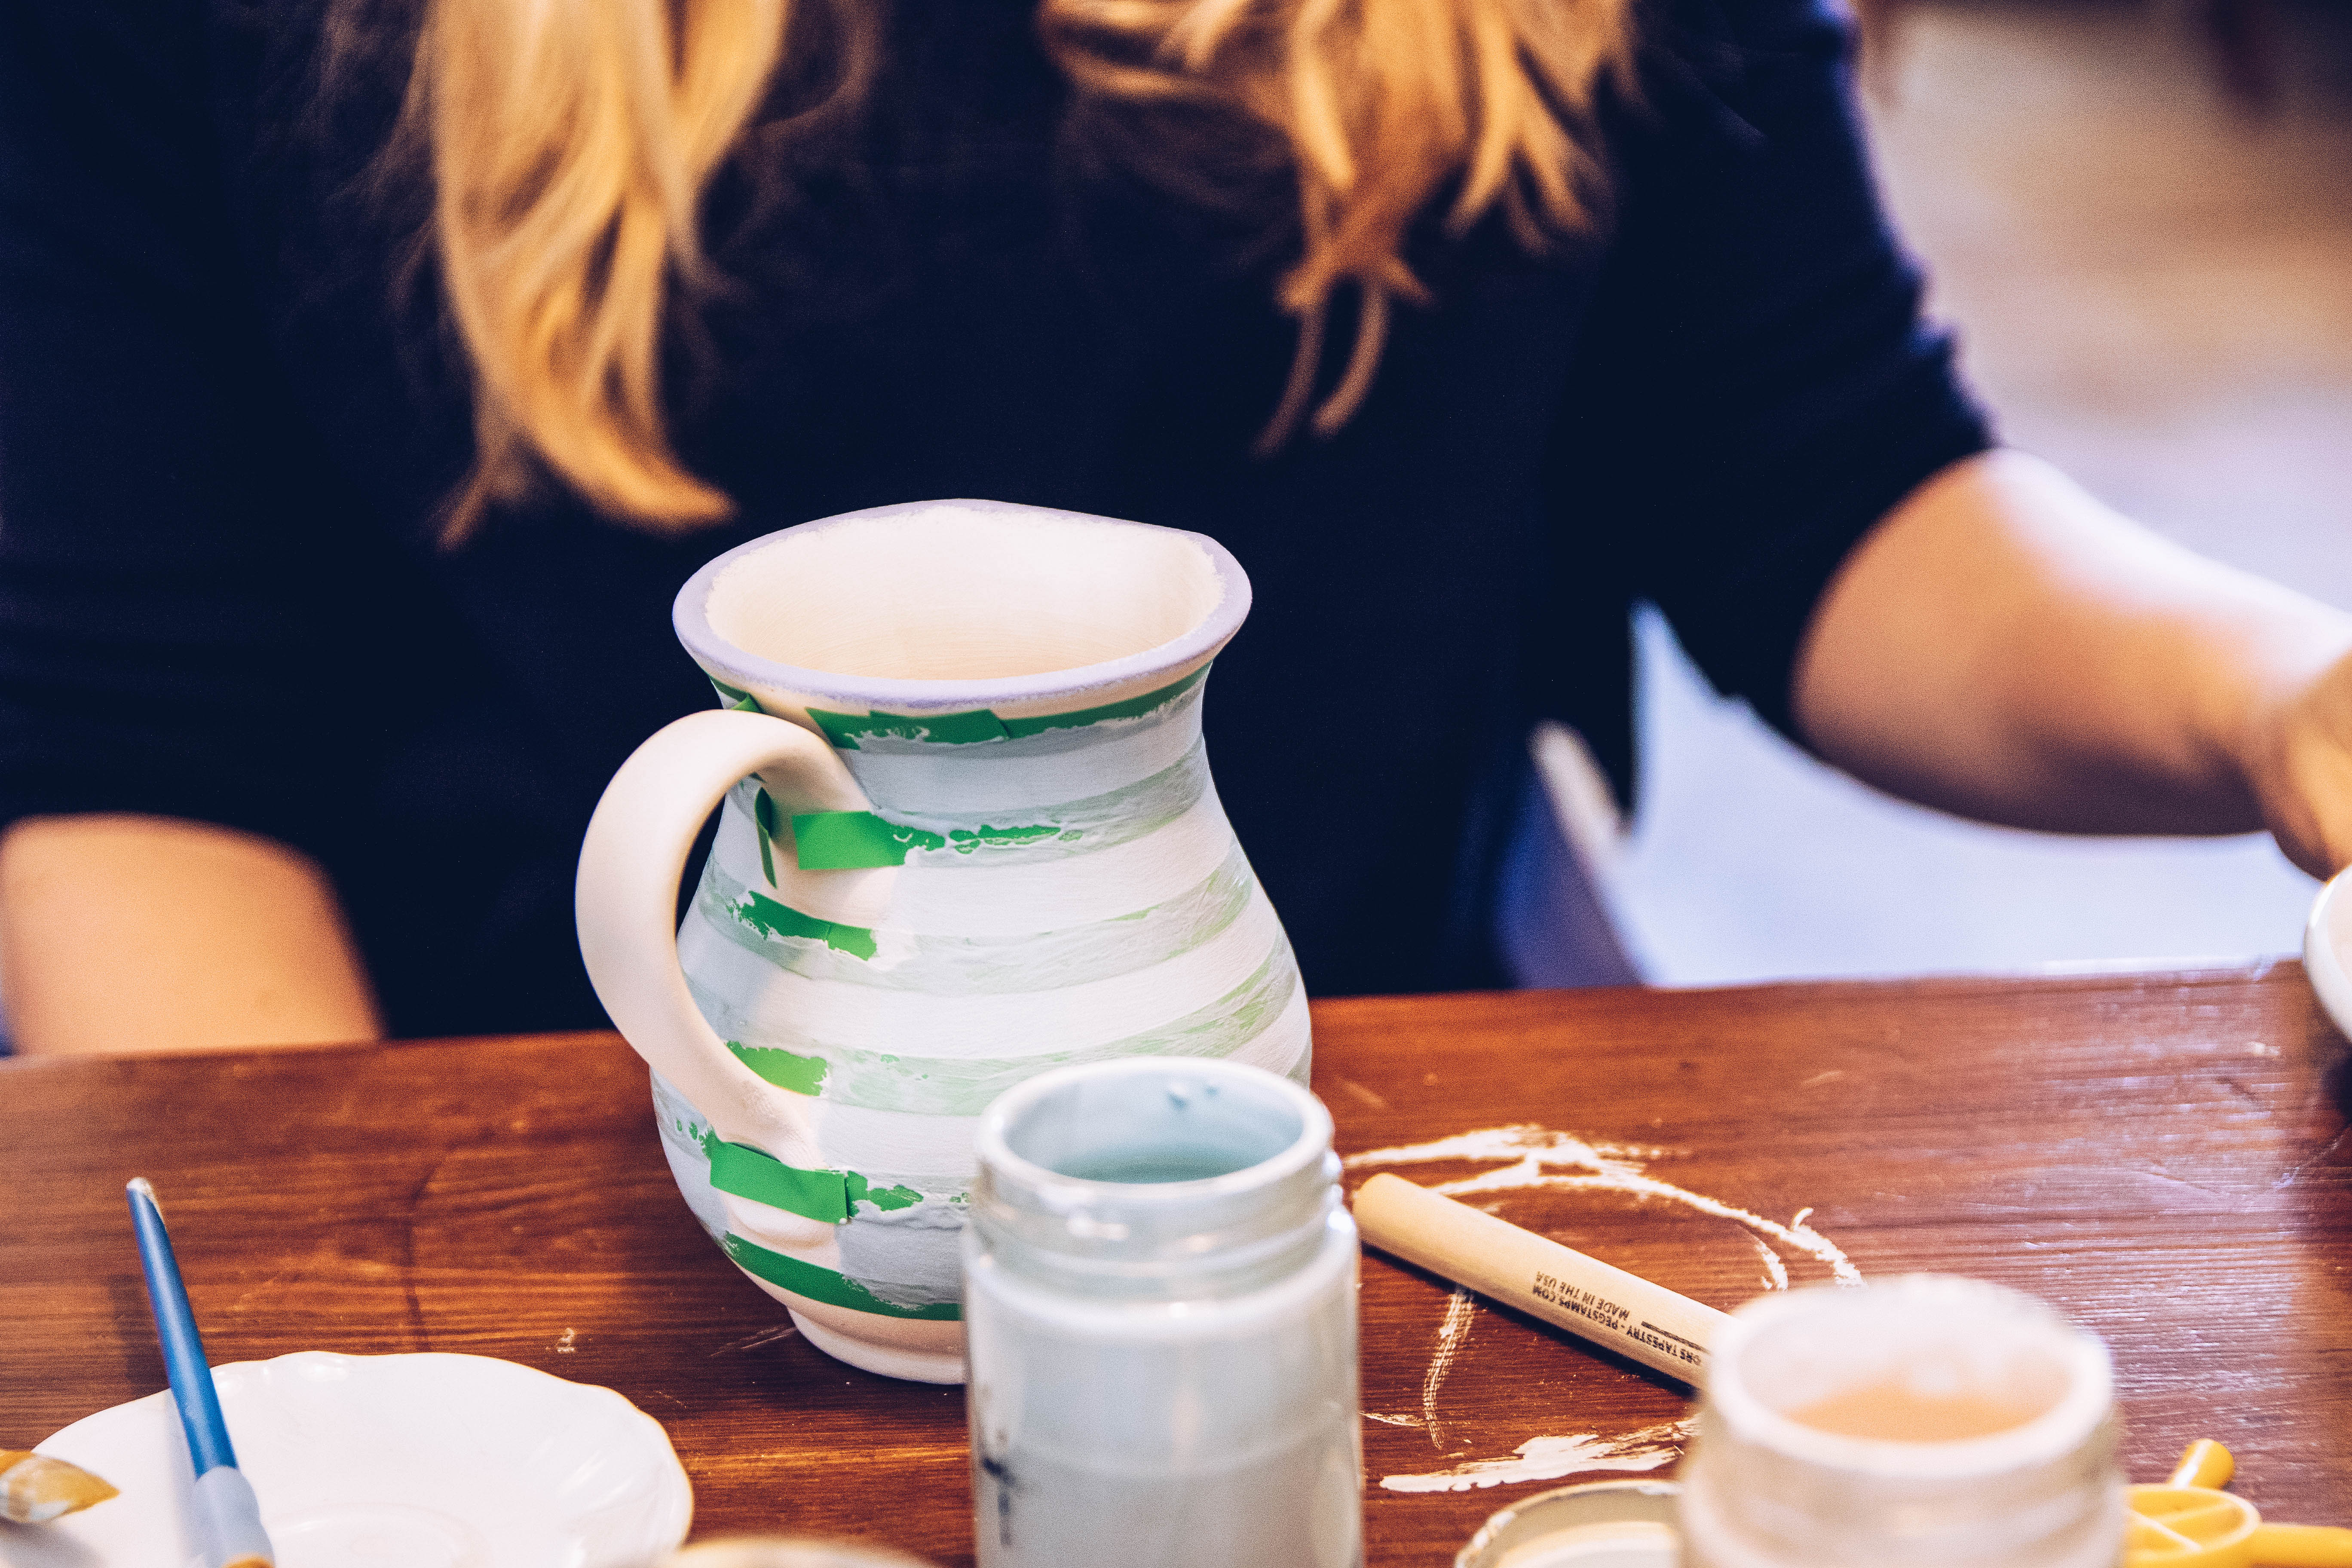 Keramik bemalen: 4 kreative und einfache Ideen